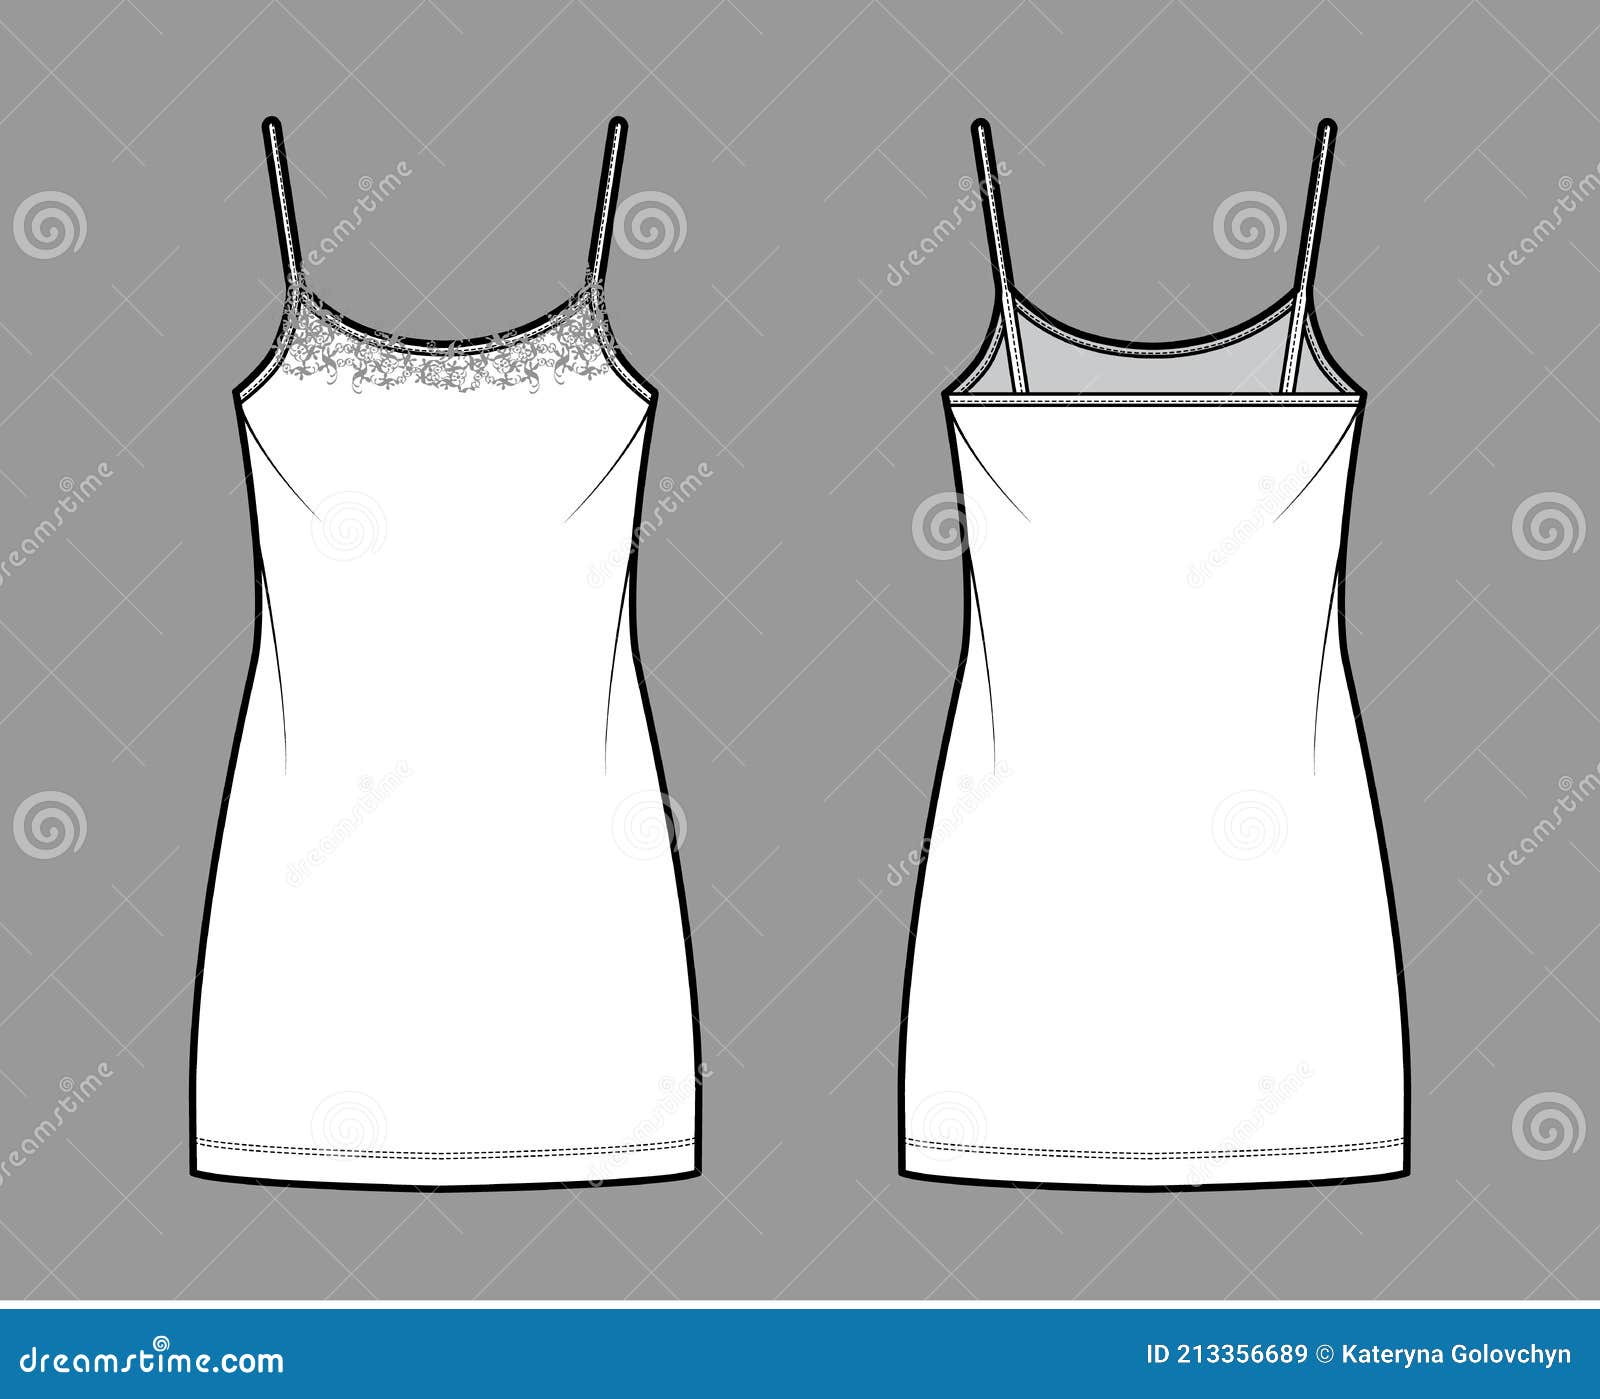 Chemise Dress Sleepwear Pajama Technical Fashion Illustration with Mini ...